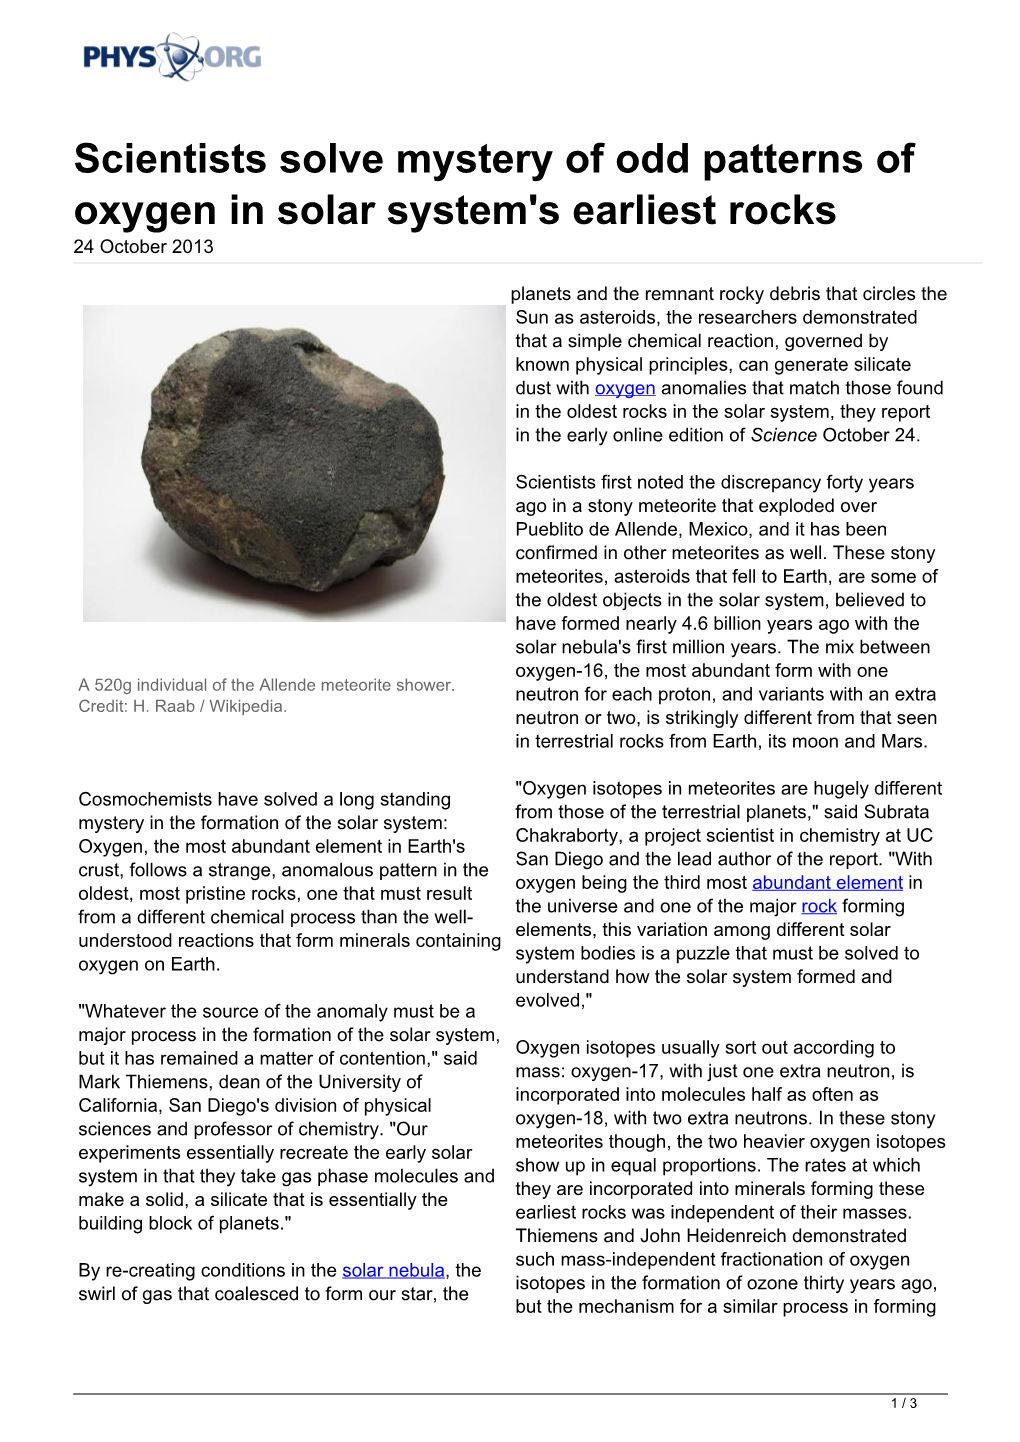 Scientists Solve Mystery of Odd Patterns of Oxygen in Solar System's Earliest Rocks 24 October 2013